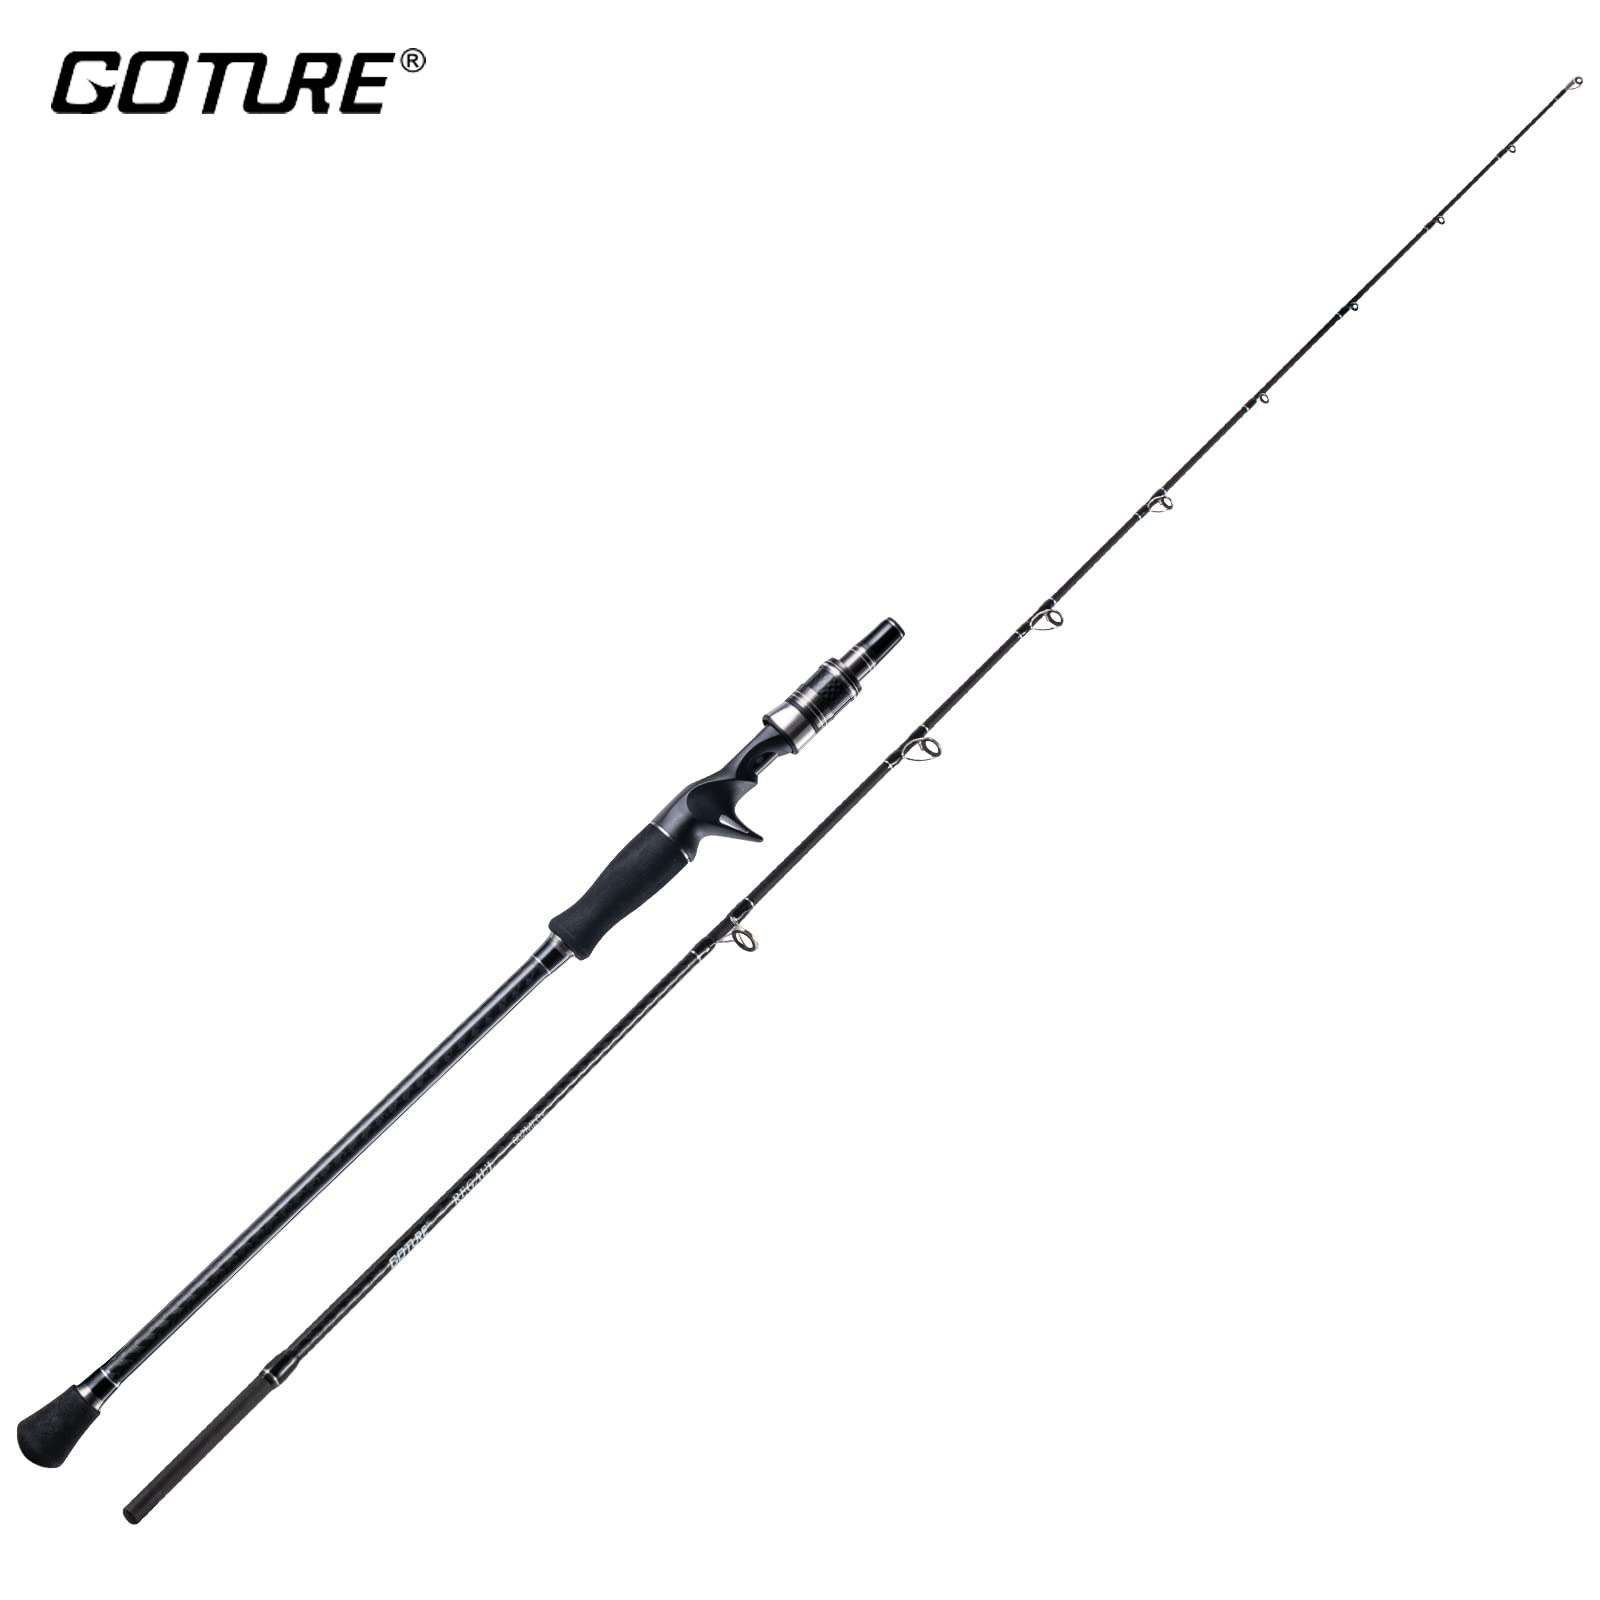 1.6m 1.83m 1.98m Carbon Fiber Sea Fishing Casting Rod with Cork